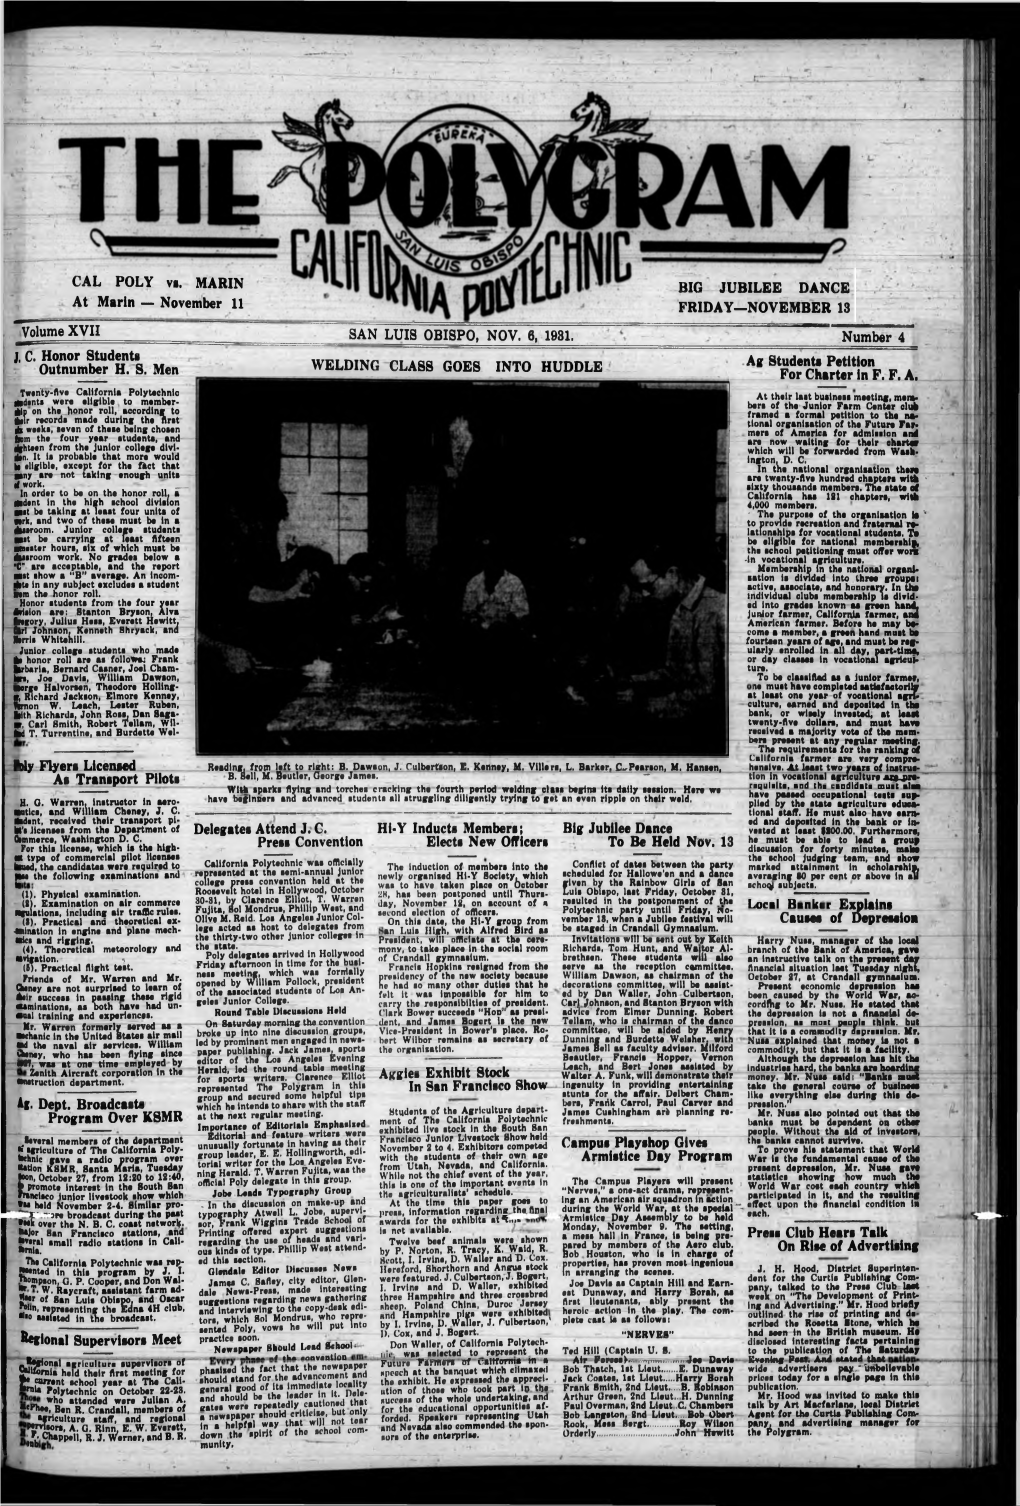 The Polygram, November 6, 1931